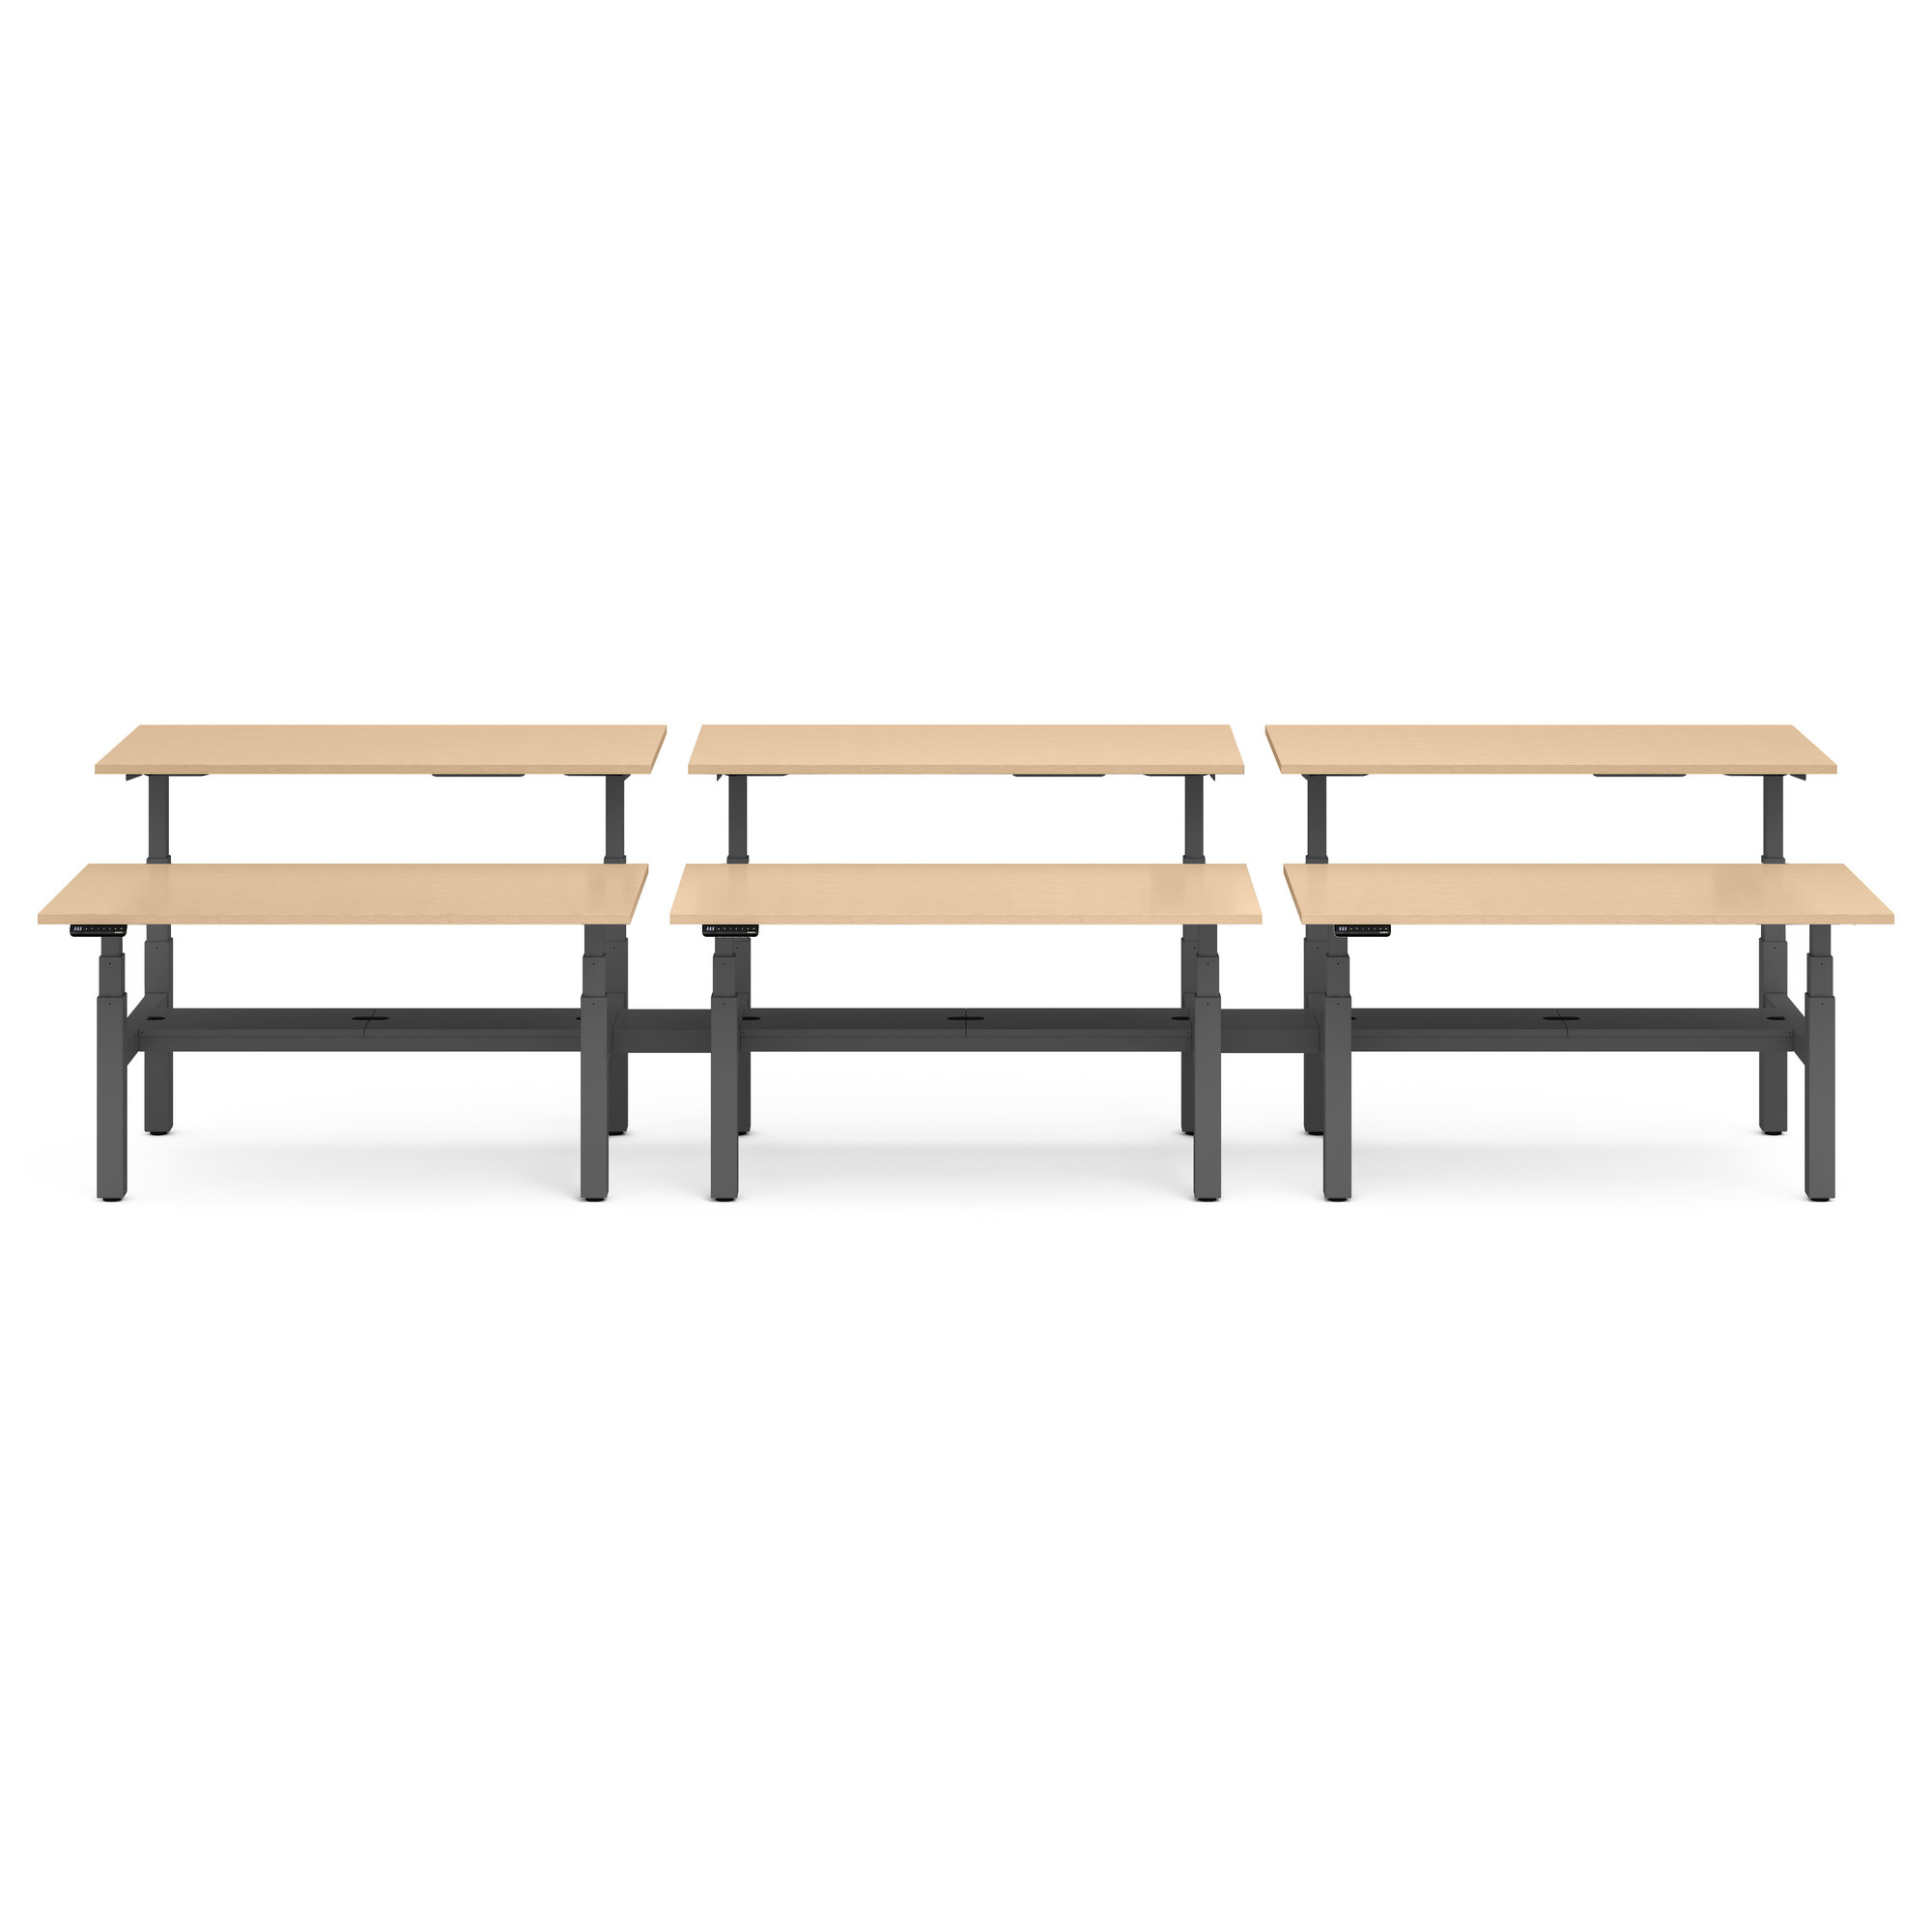 Series L Adjustable Height Double Desk for 6, Natural Oak, 60", Charcoal Legs,Natural Oak,hi-res